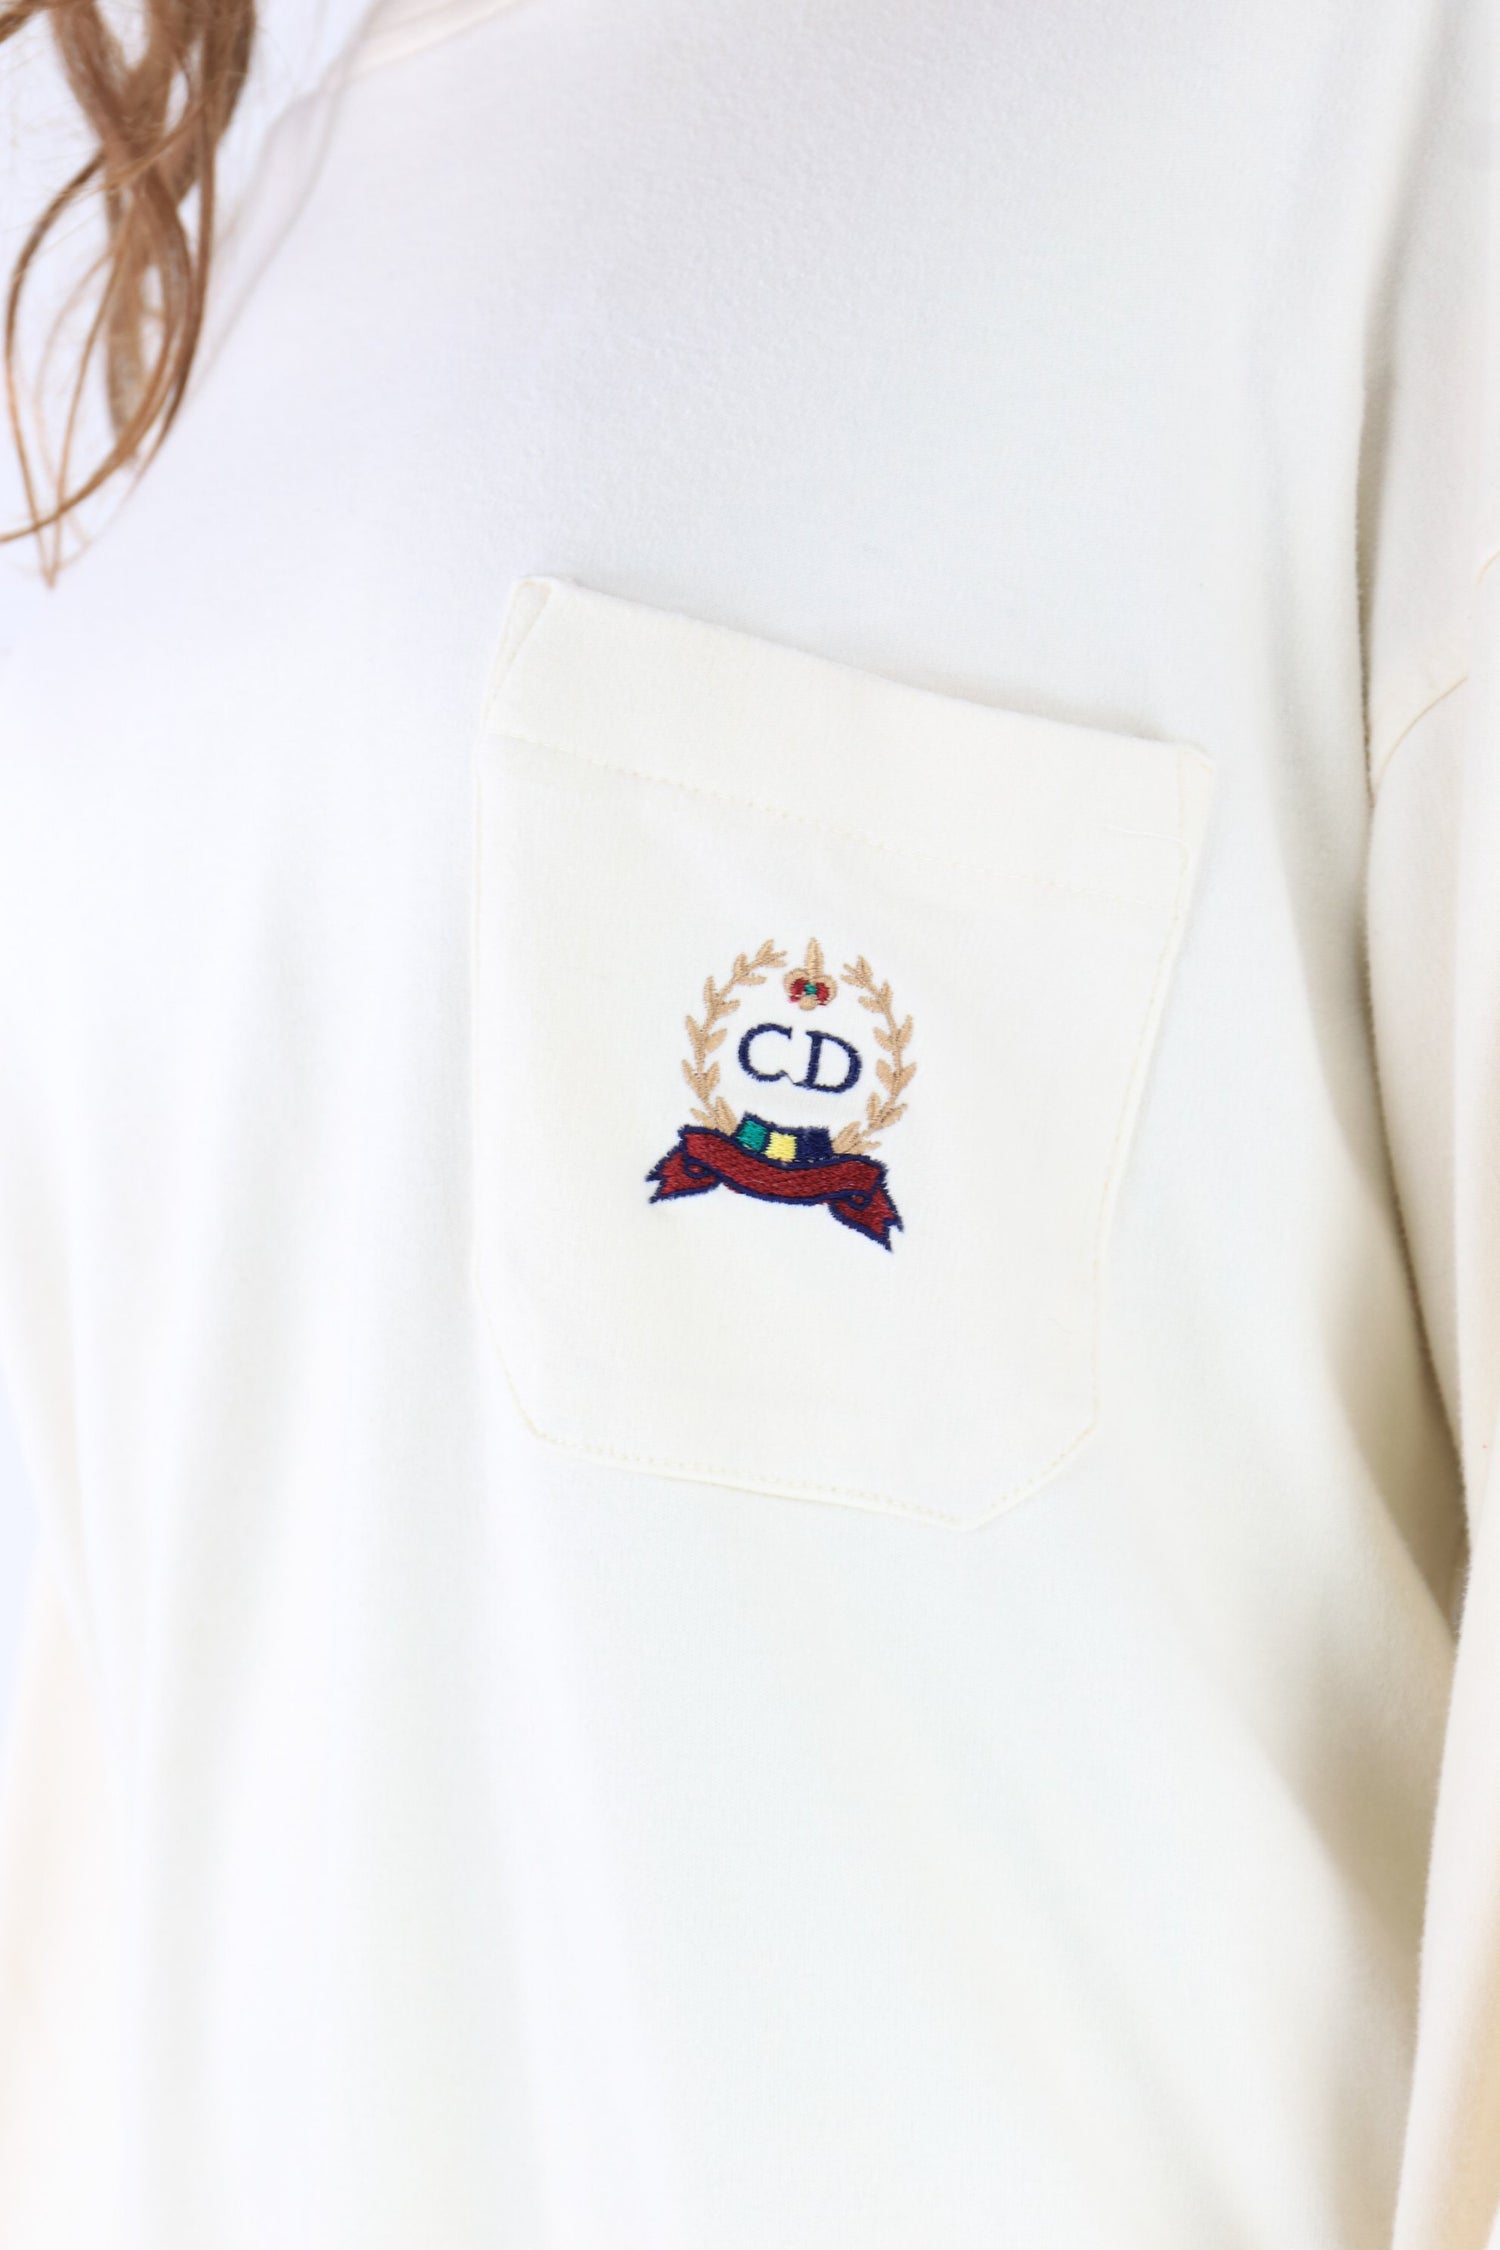 Christian Dior Sweatshirt Cream Large